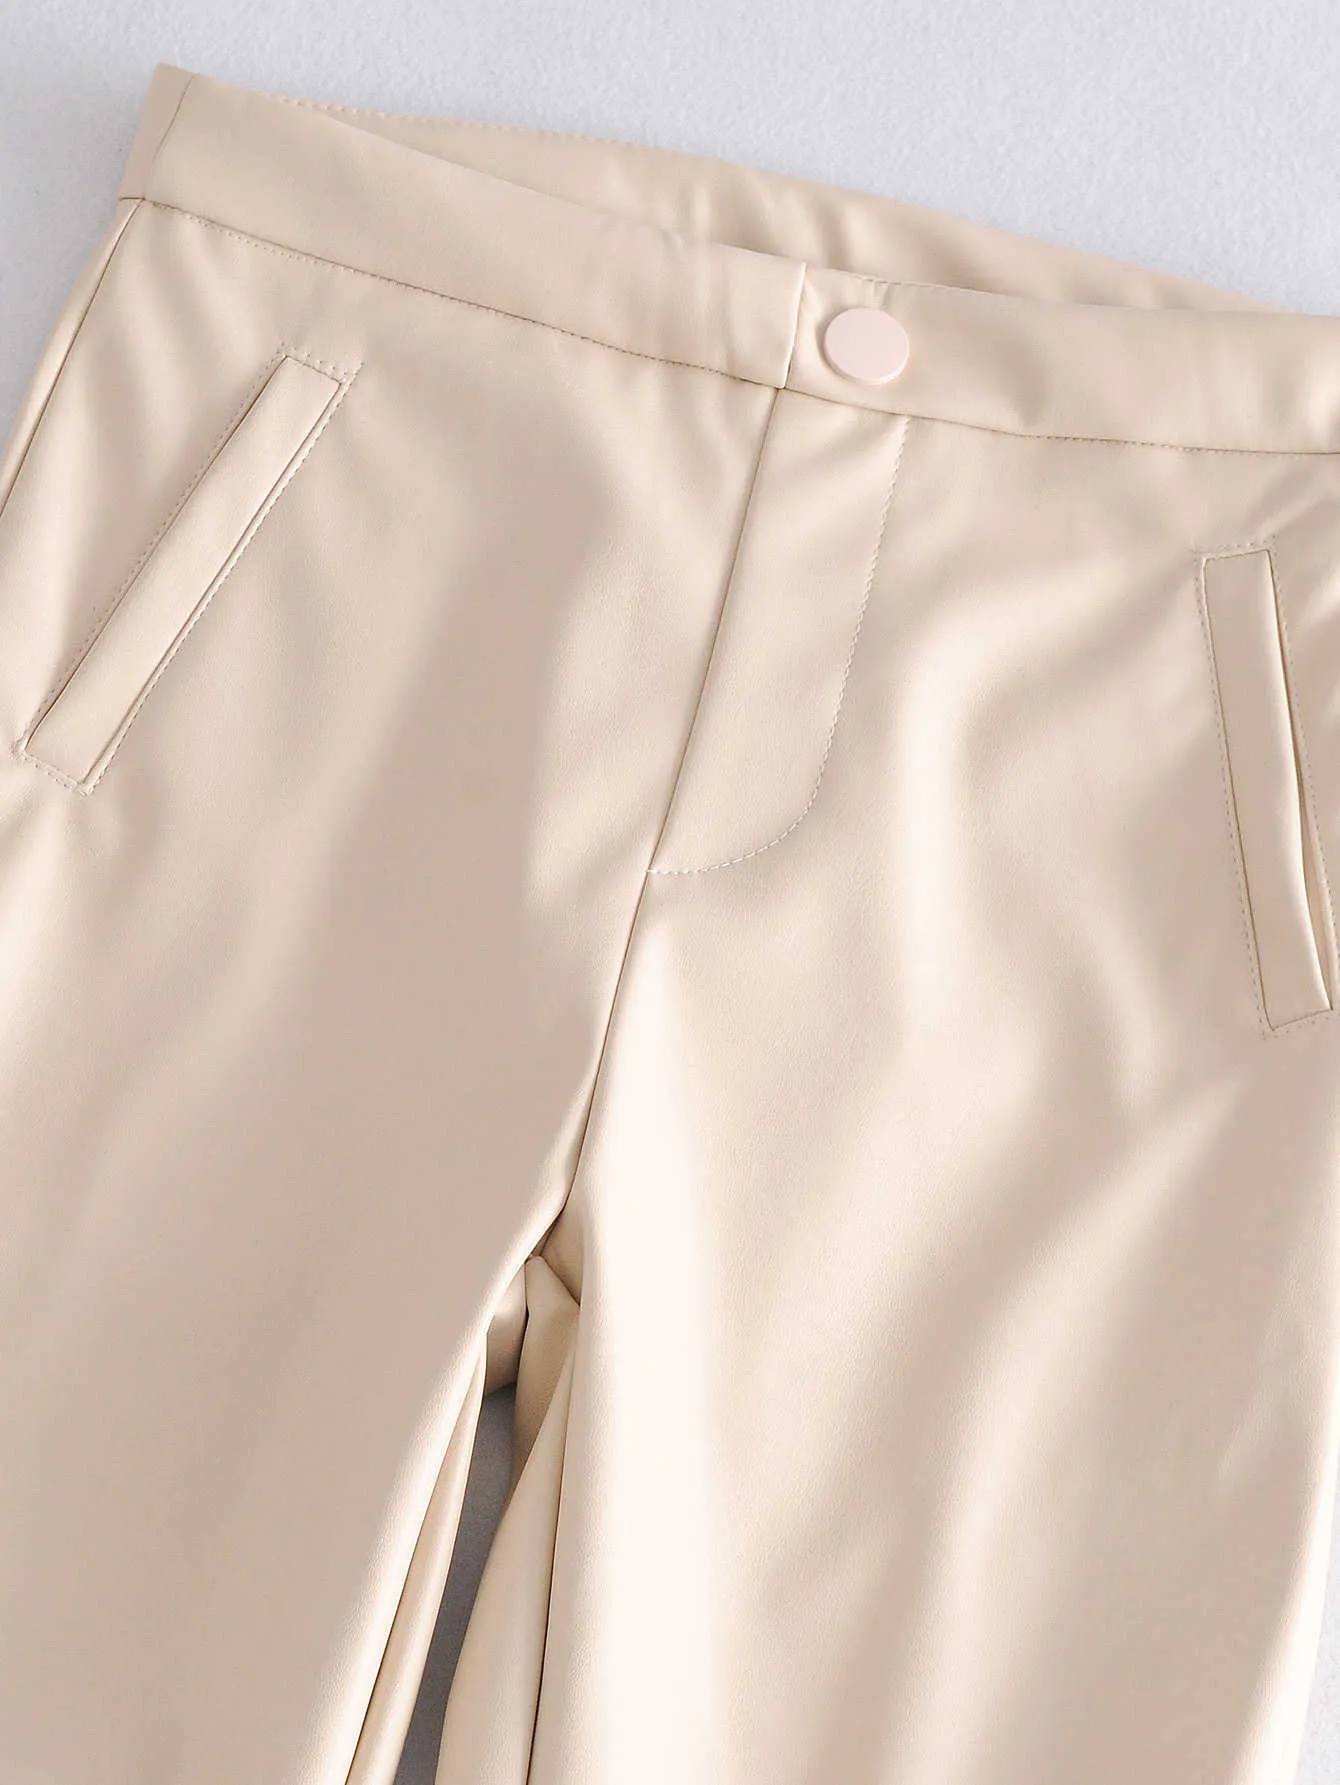 Pantaloni da donna in pelle PU beige ZA Pantaloni elastici in vita Pantaloni sportivi slim skinny casual da ufficio da donna 210915